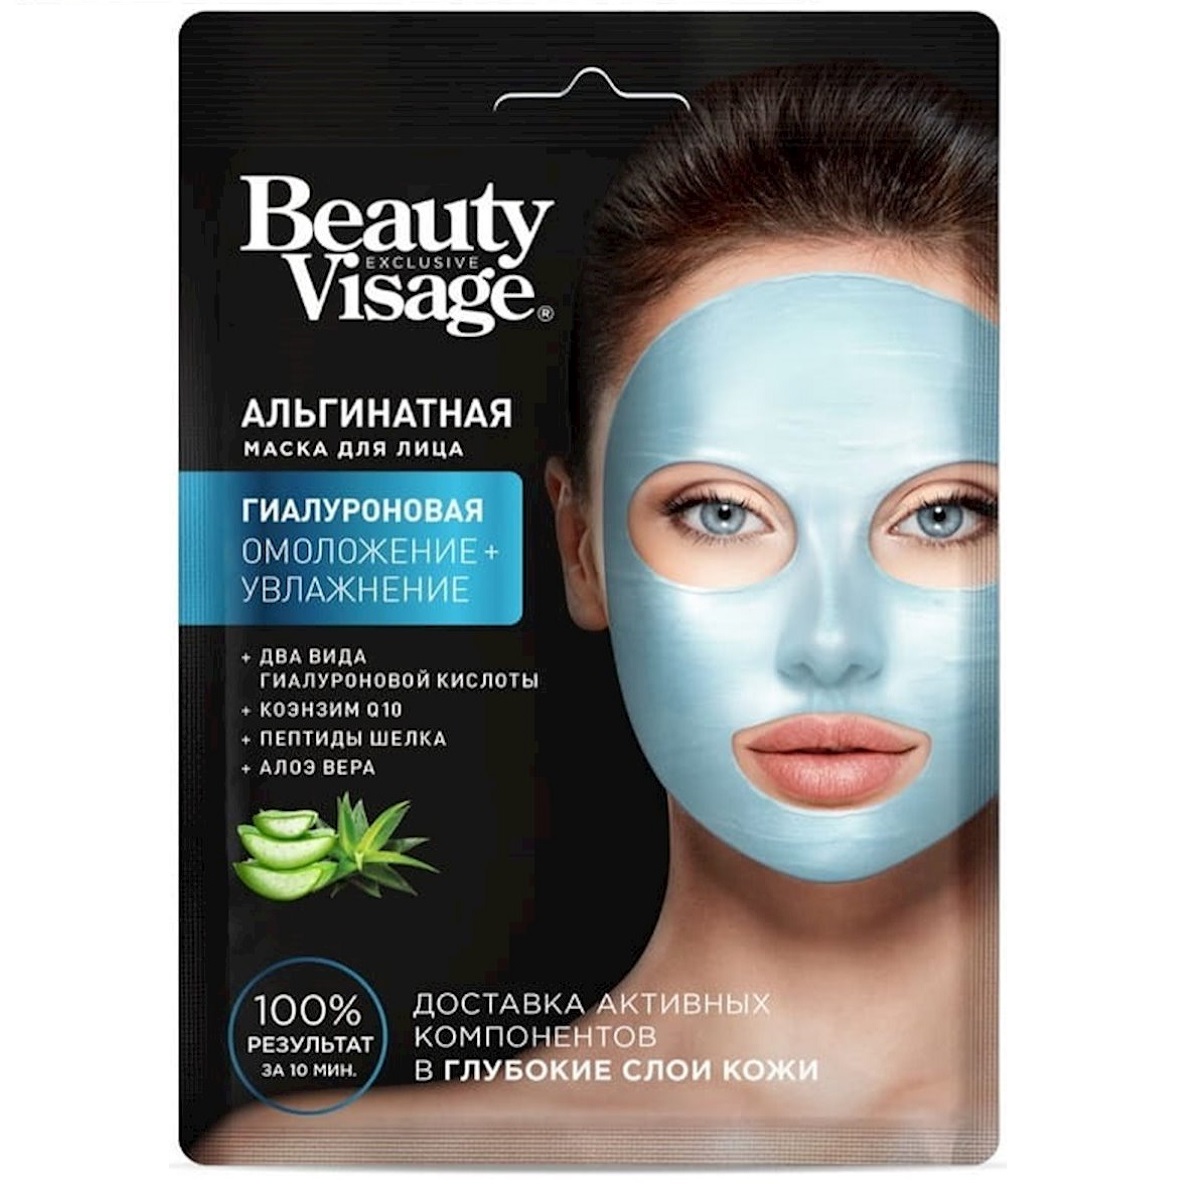 ماسک صورت فیتو کاسمتیک مدل Beauty Visage وزن 20 گرم